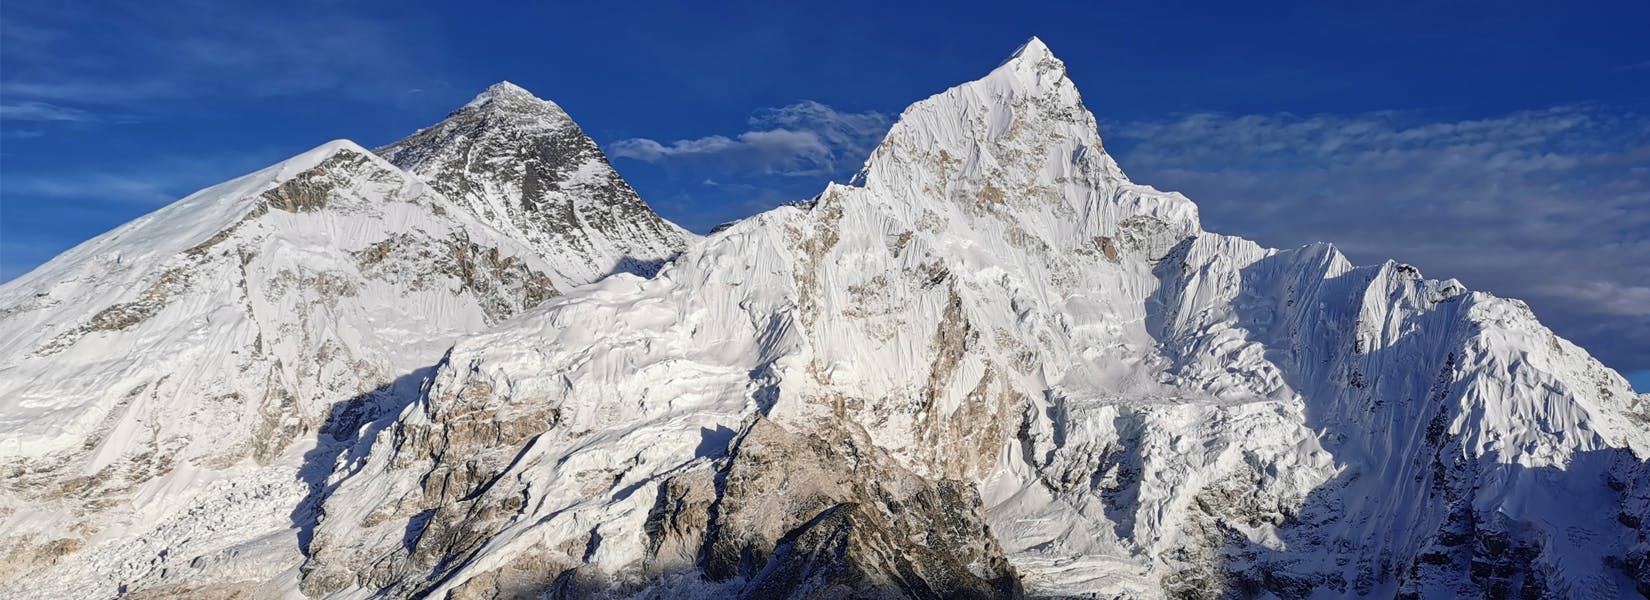 Everest Glimpse Trek - <span class="font-light">9 days</span>